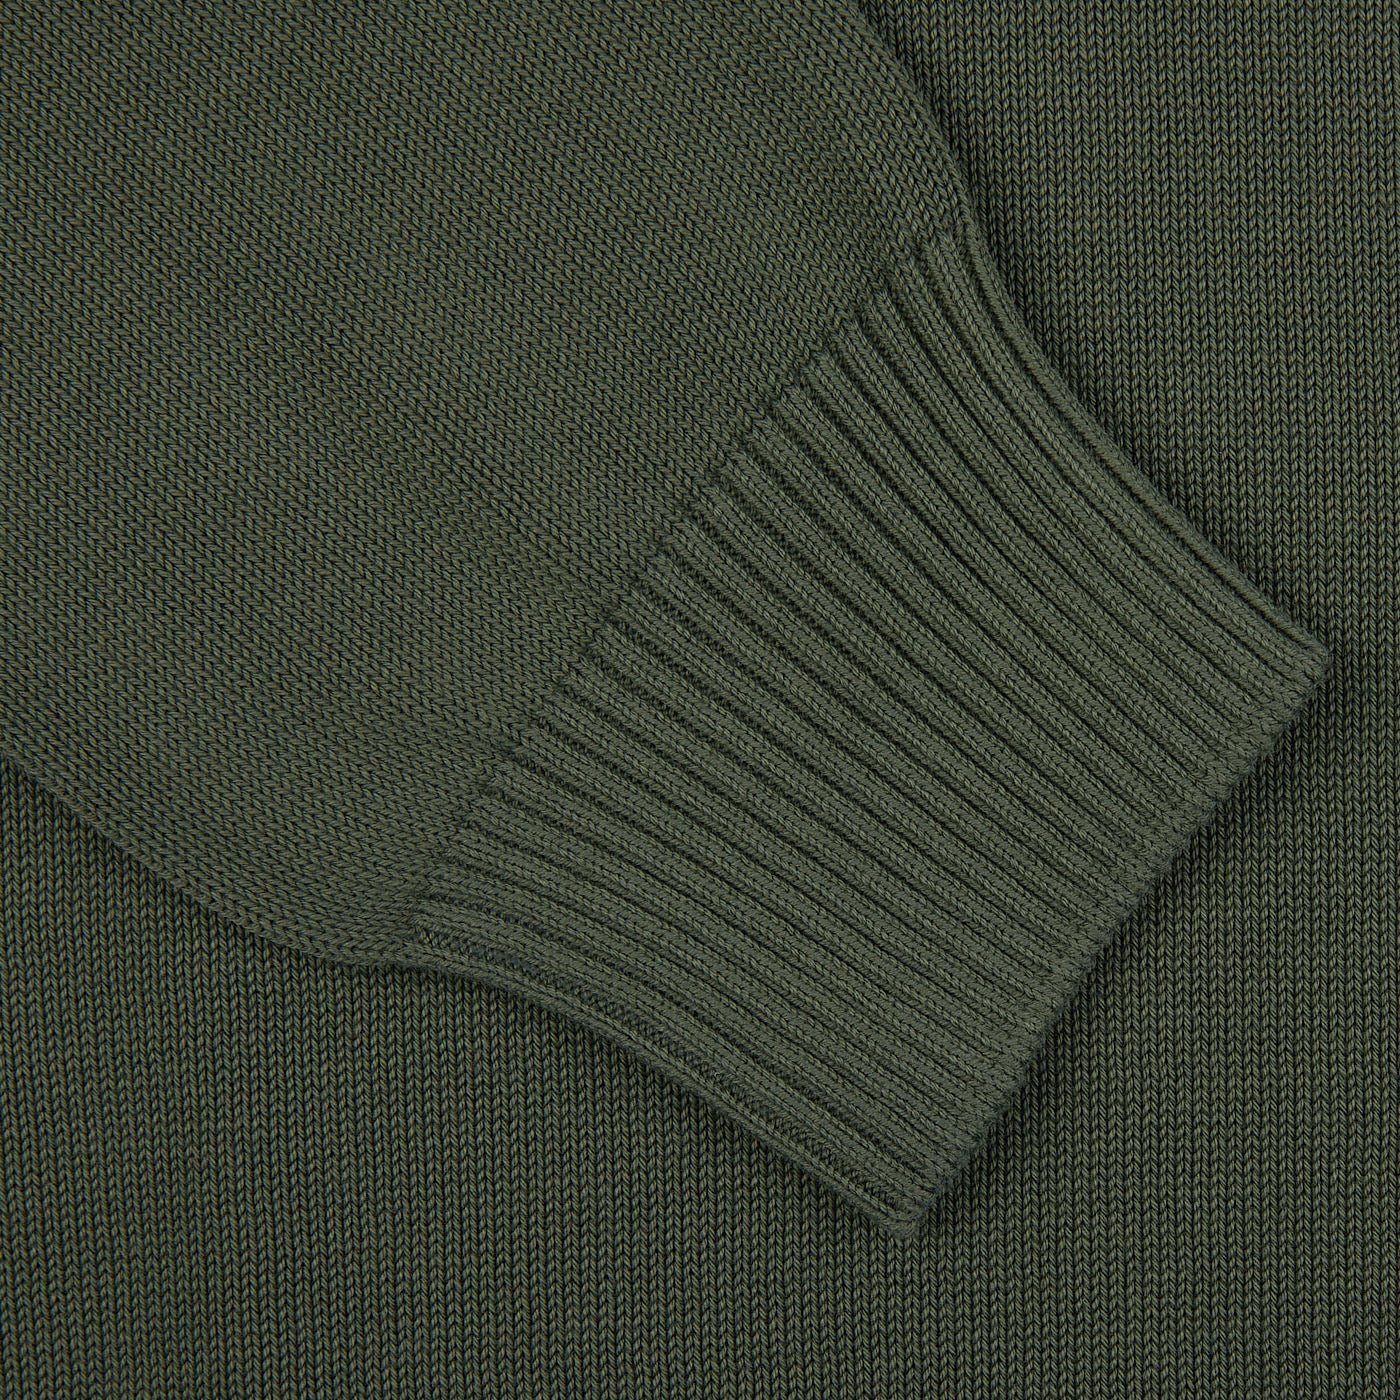 A close up of a Gran Sasso Dark Green Egyptian Cotton Crewneck Sweater.